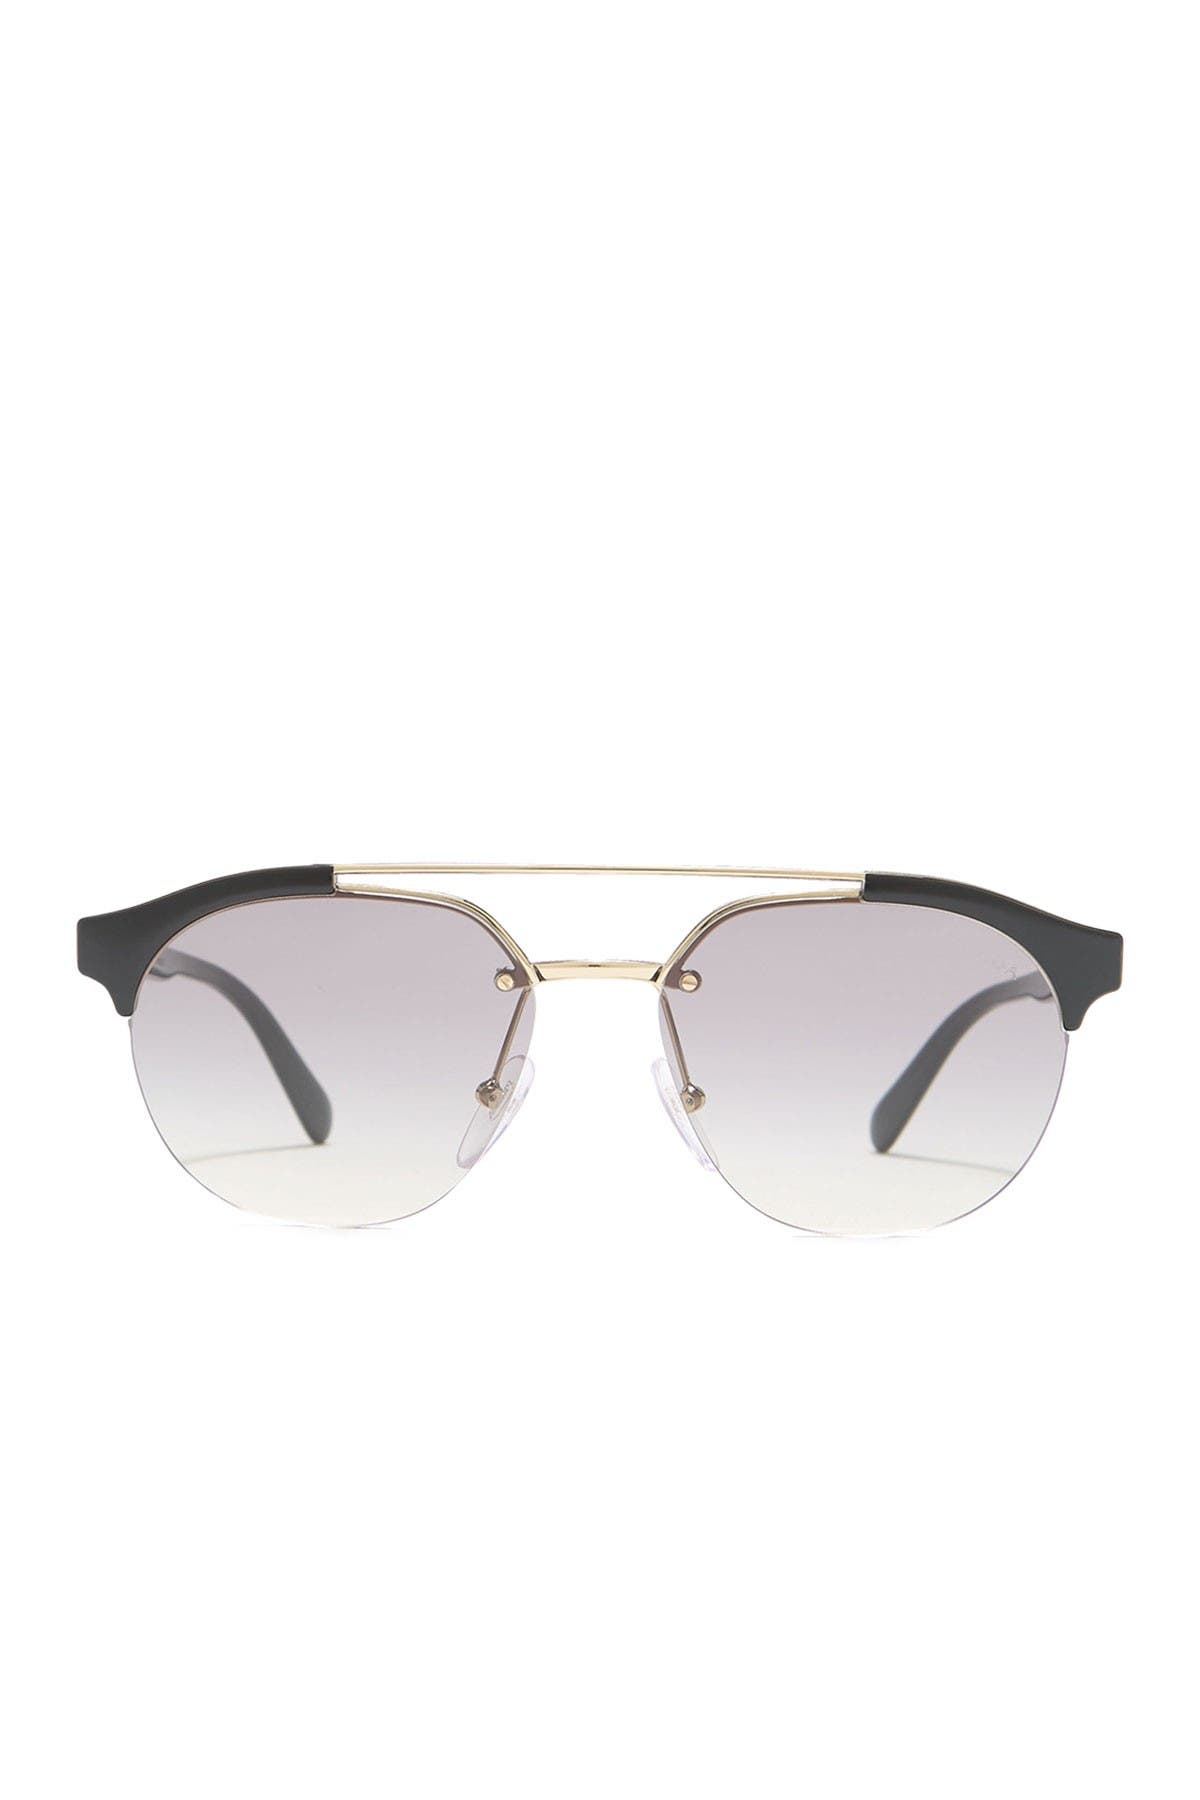 prada 54mm cat eye sunglasses